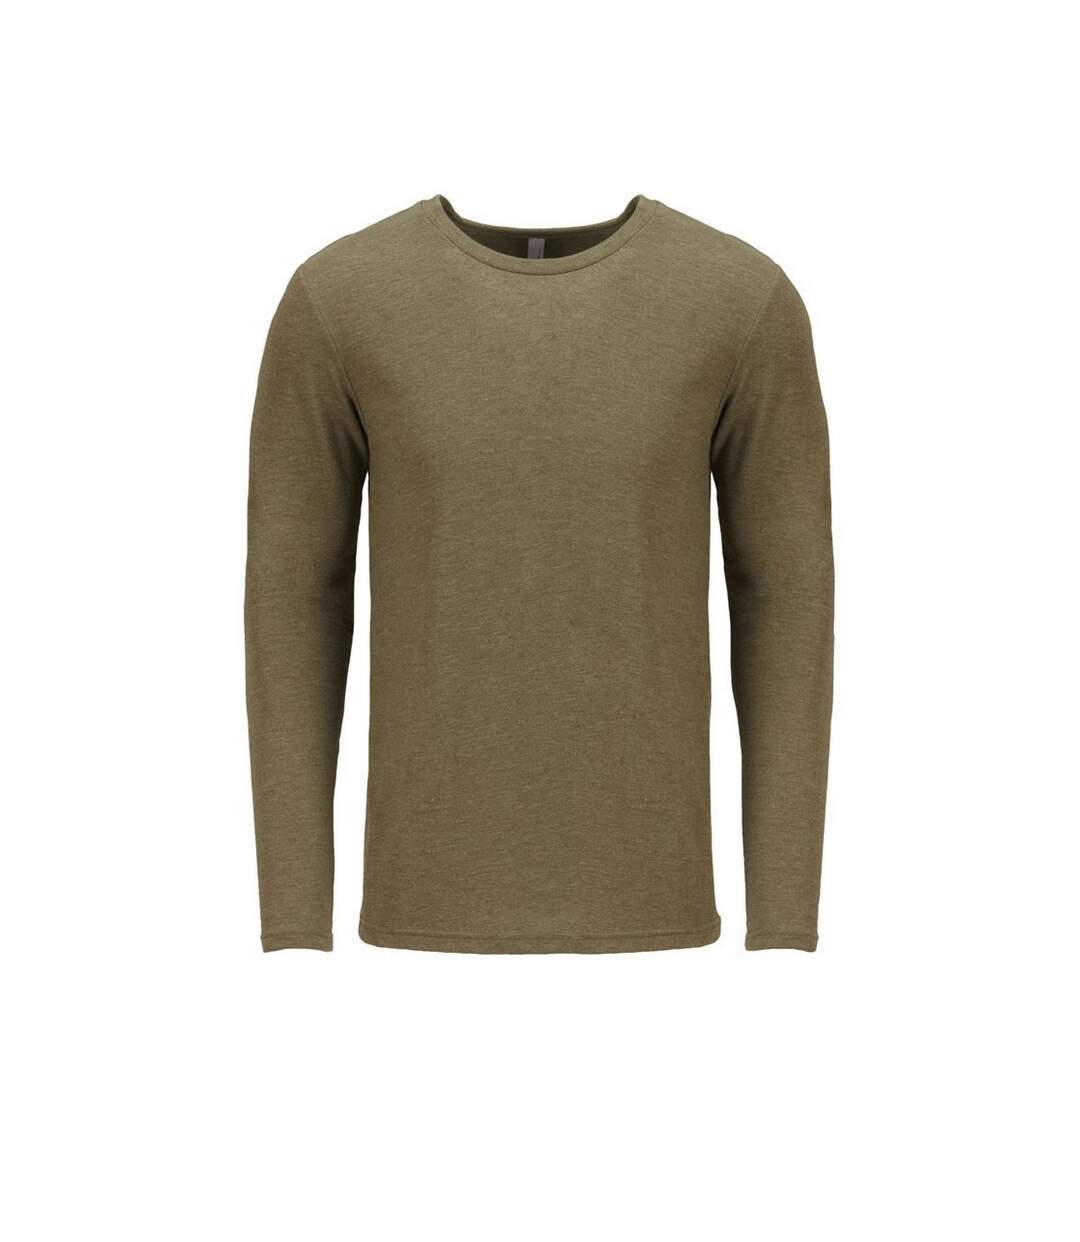 Next Level - T-shirt TRI-BLEND - Adulte (Vert militaire) - UTPC3481